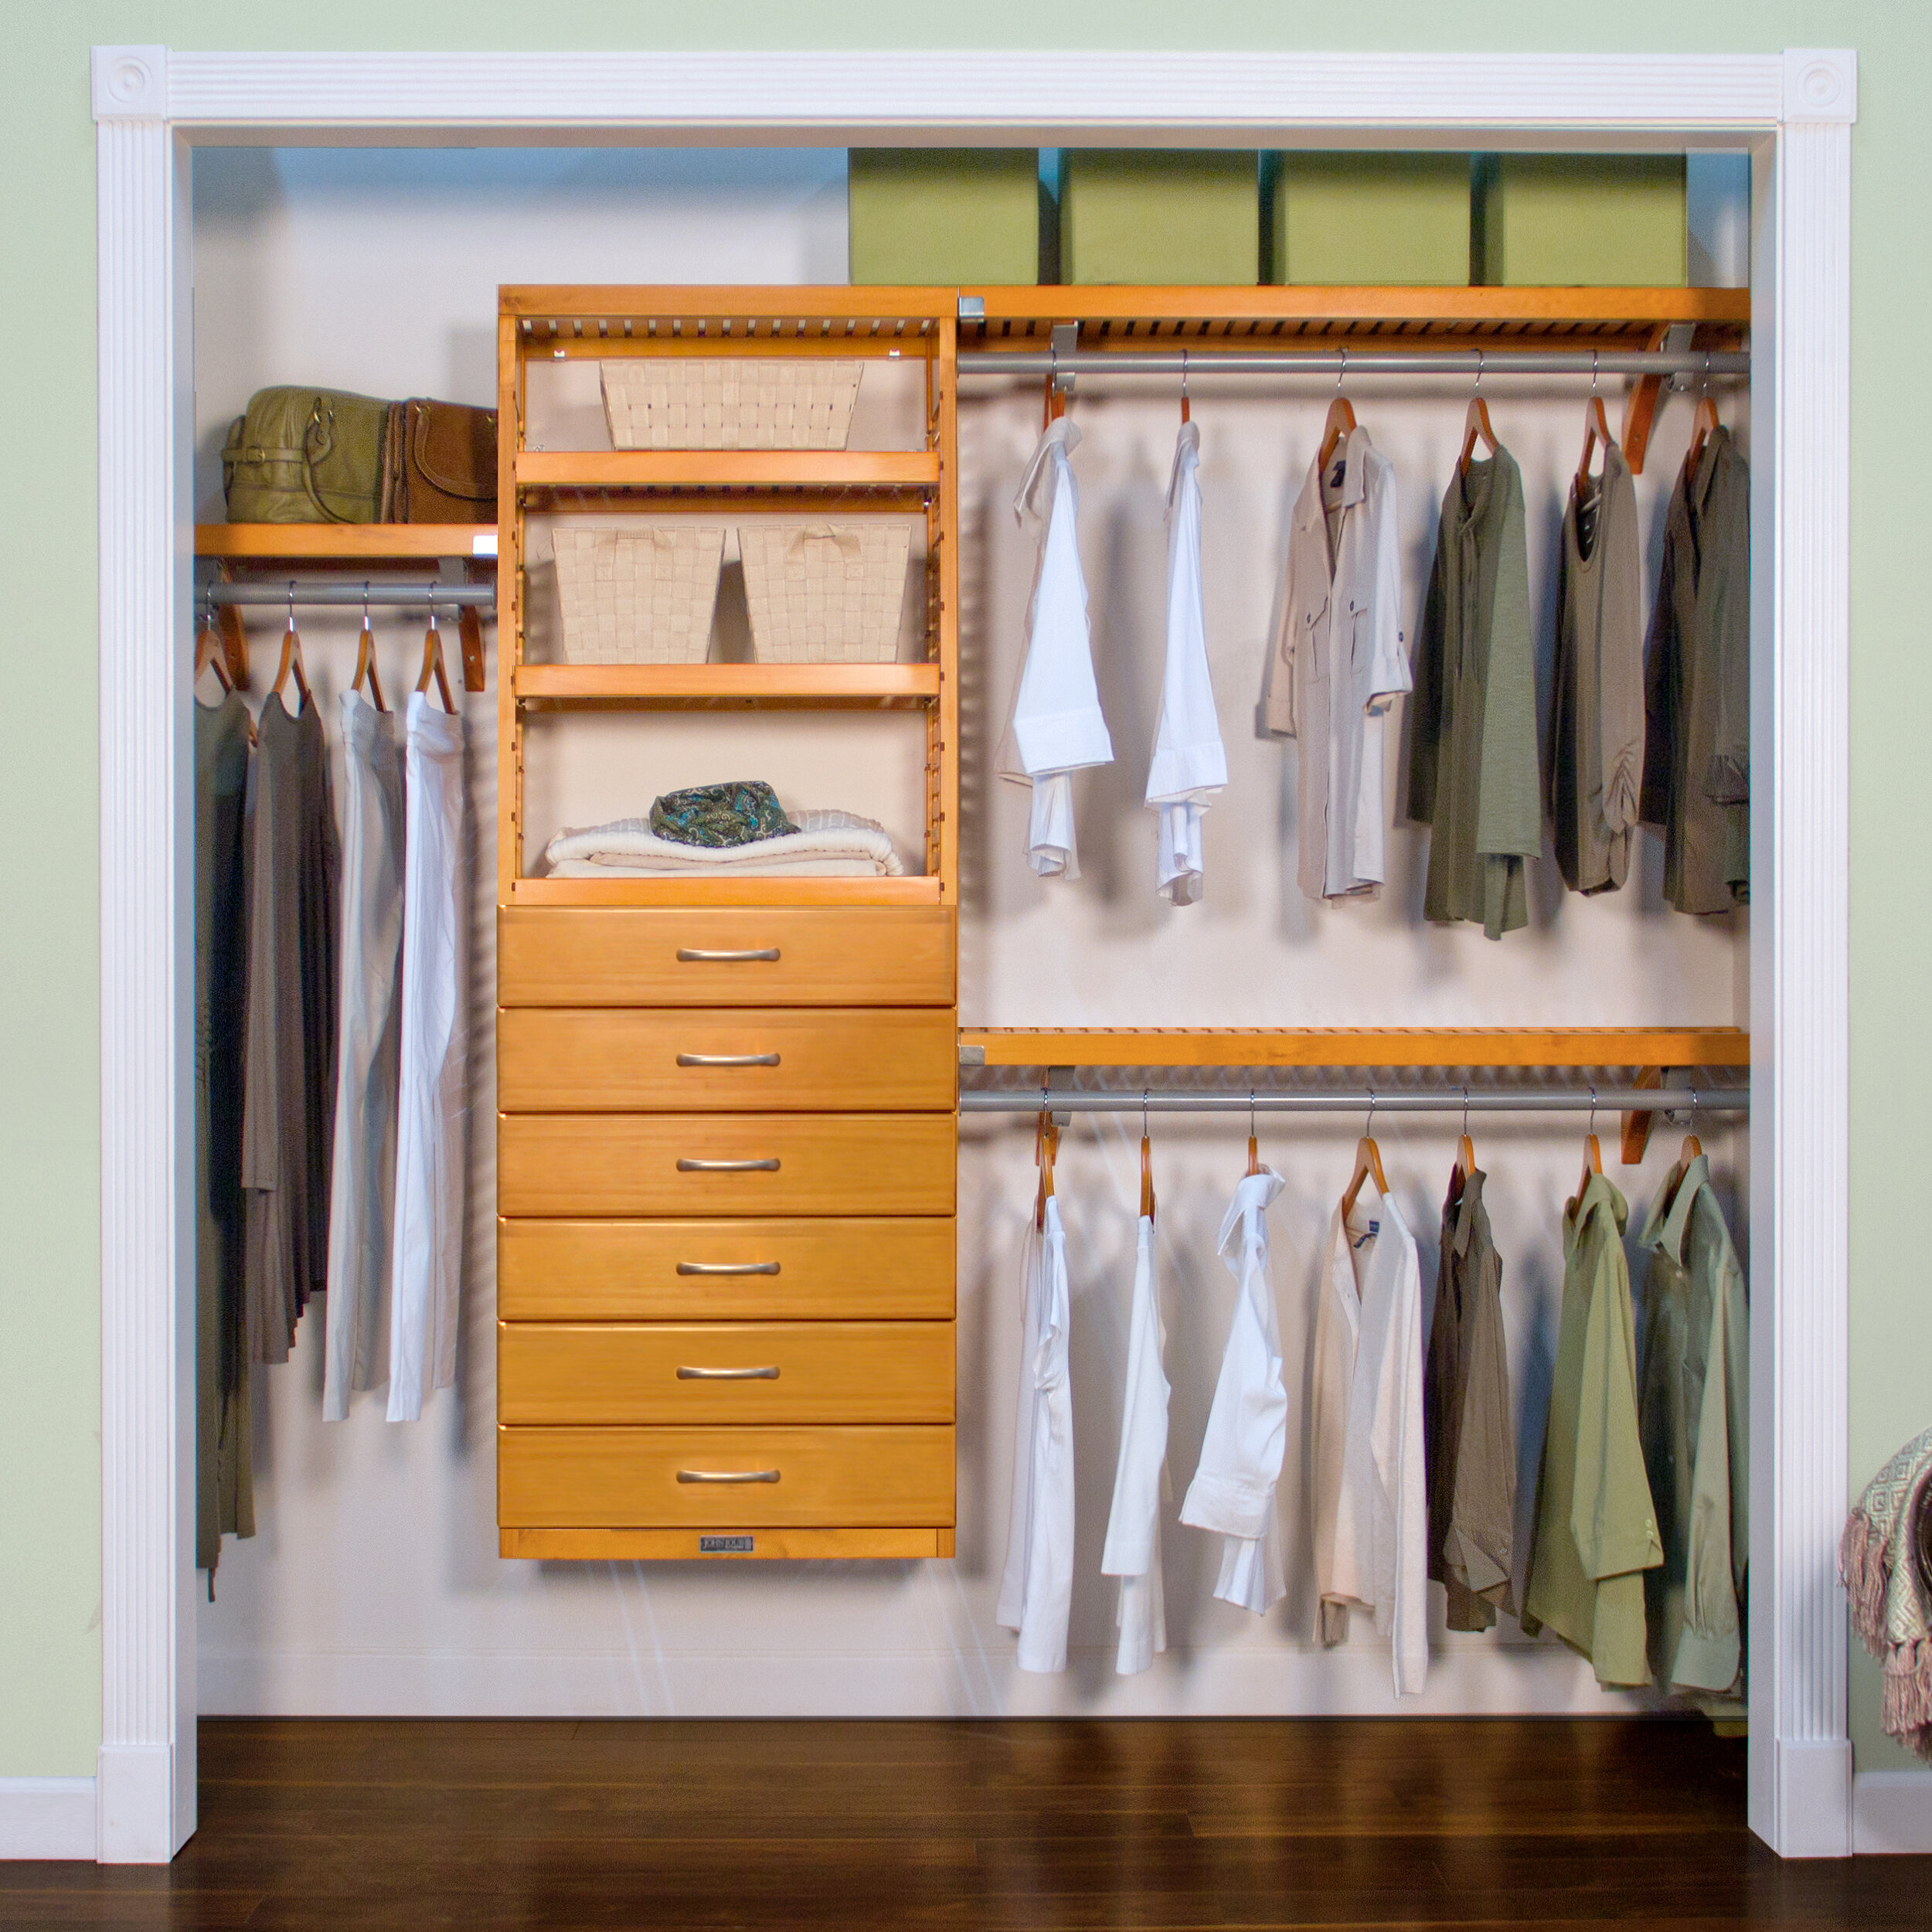 Details about   Bedroom Closet Organizer Shelf System Kit Expandable Clothes Storage Metal Rack